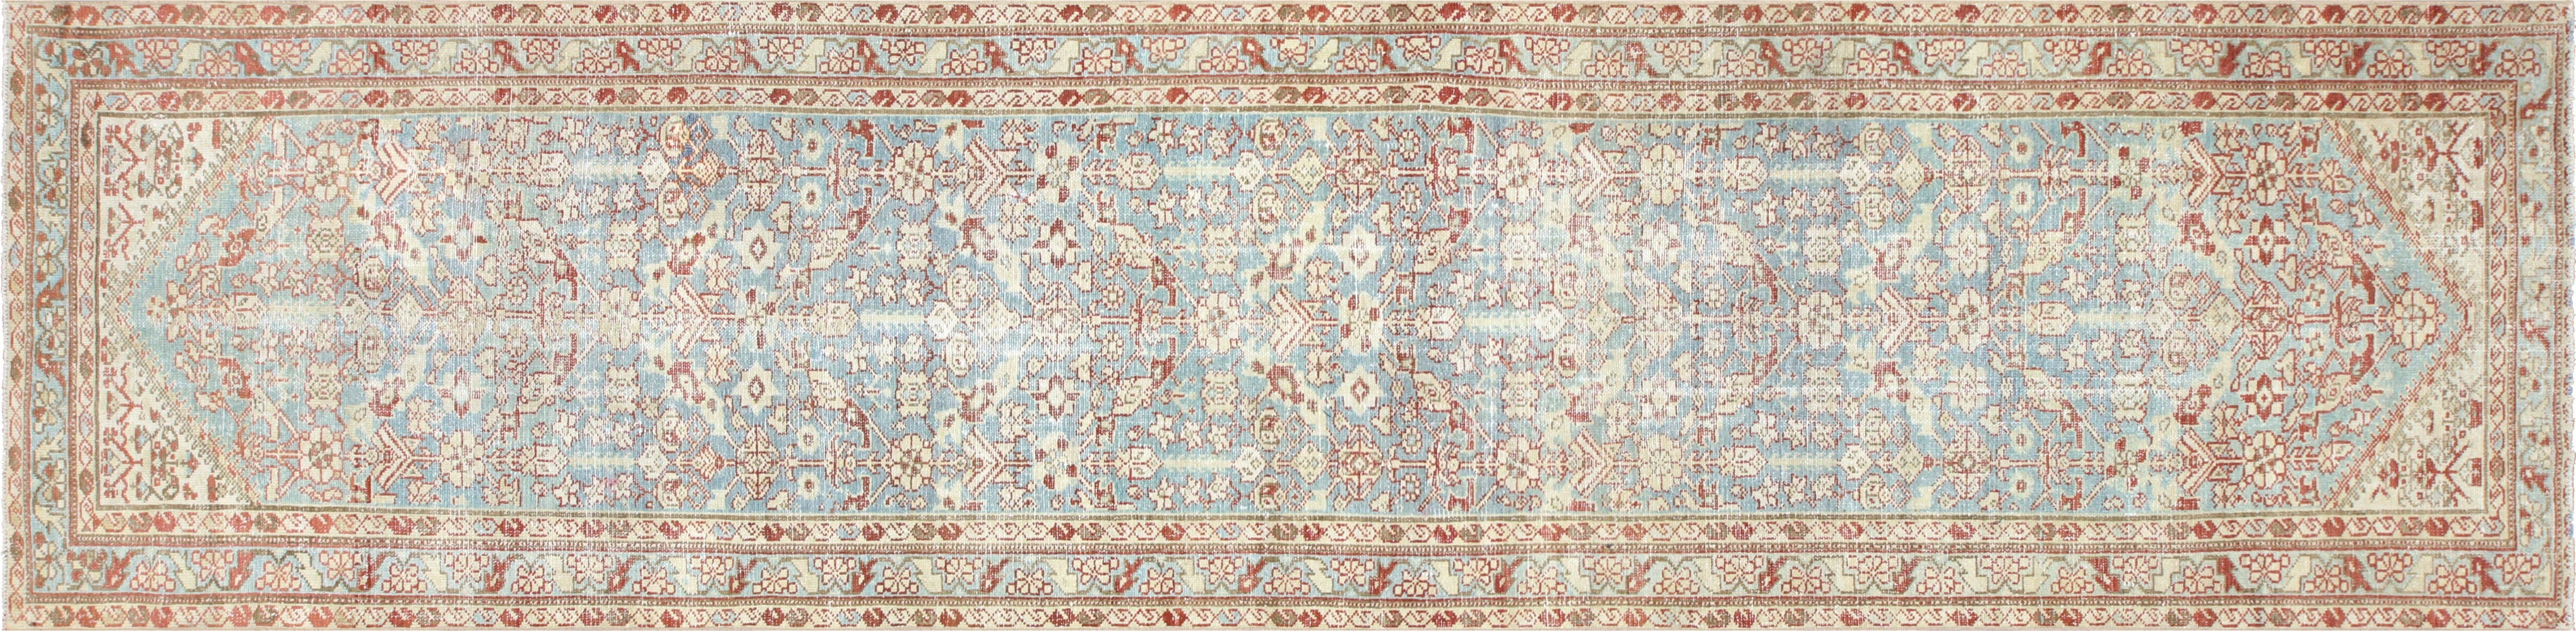 Semi Antique Persian Melayer Carpet - 3'4" x 13'5"